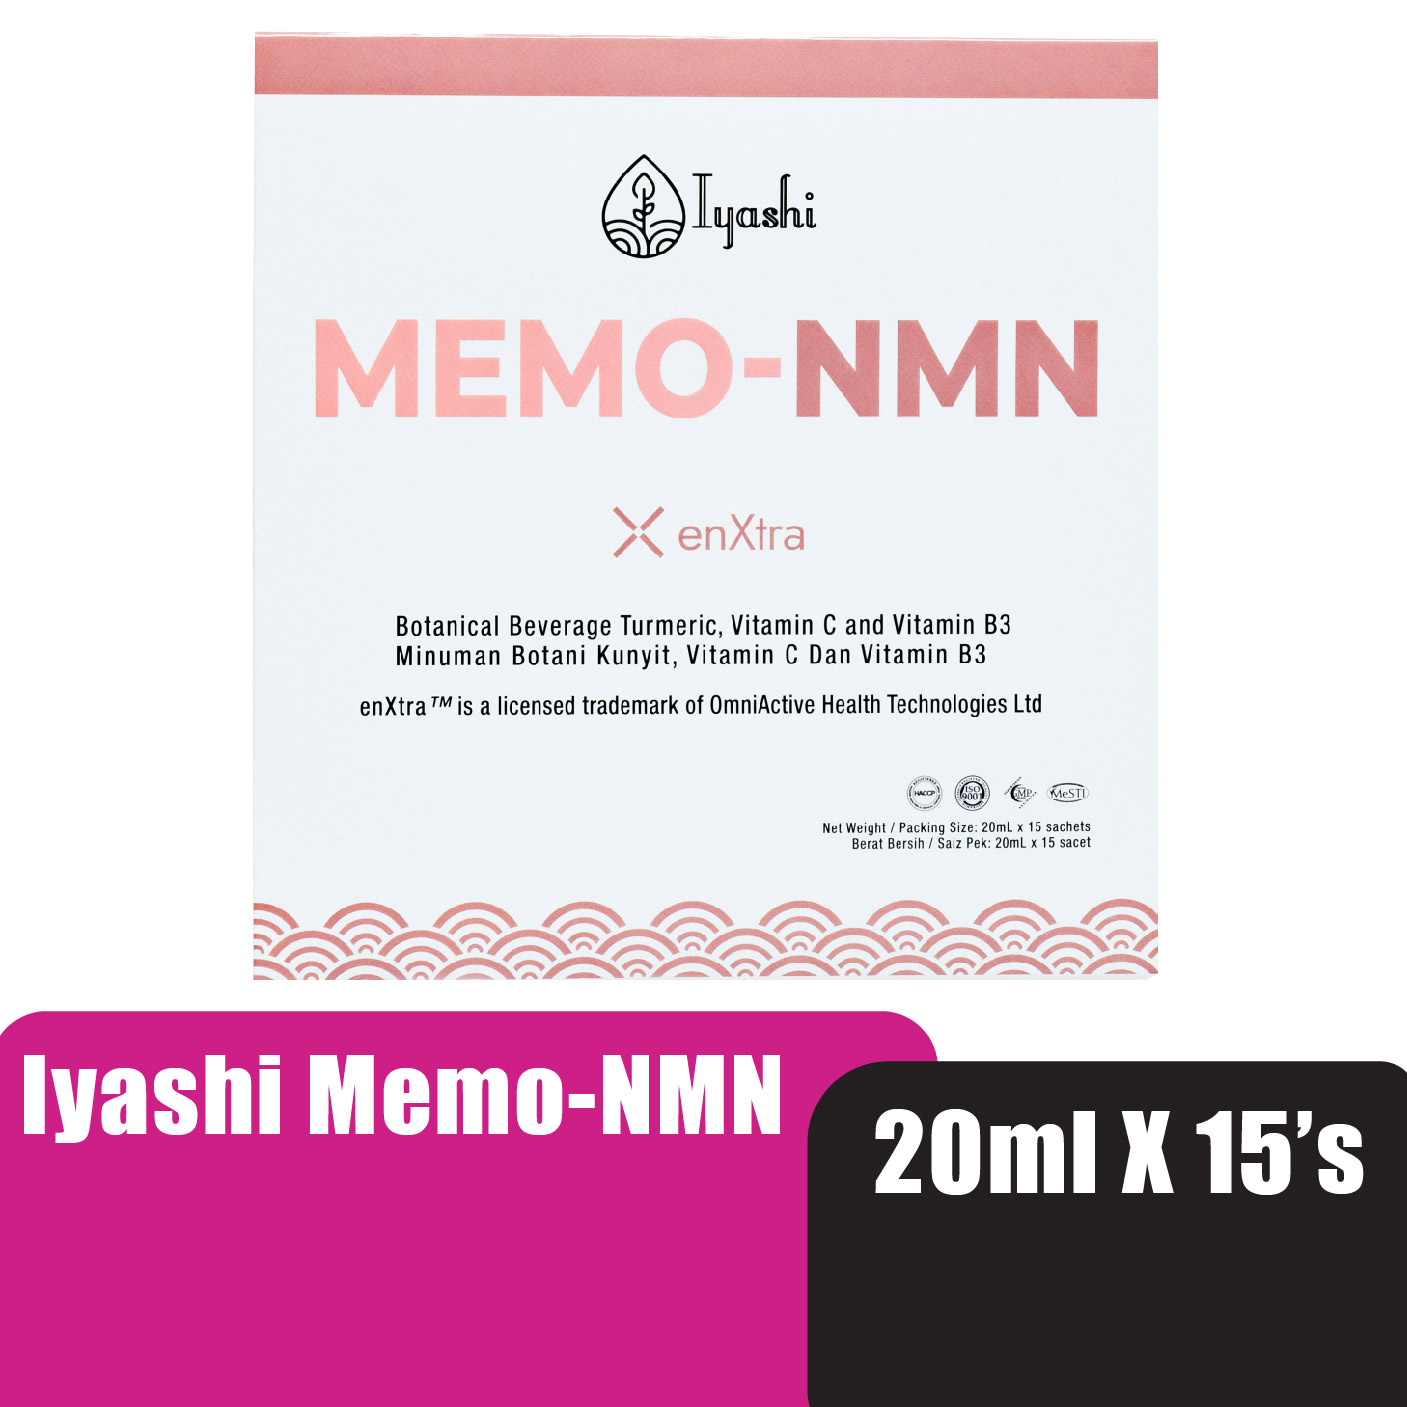 IYASHI Memo nmn Collagen Drink to promote Anti Aging ( Nmn Supplement / Collagen Supplement / Collegen ) 20ml x 15's